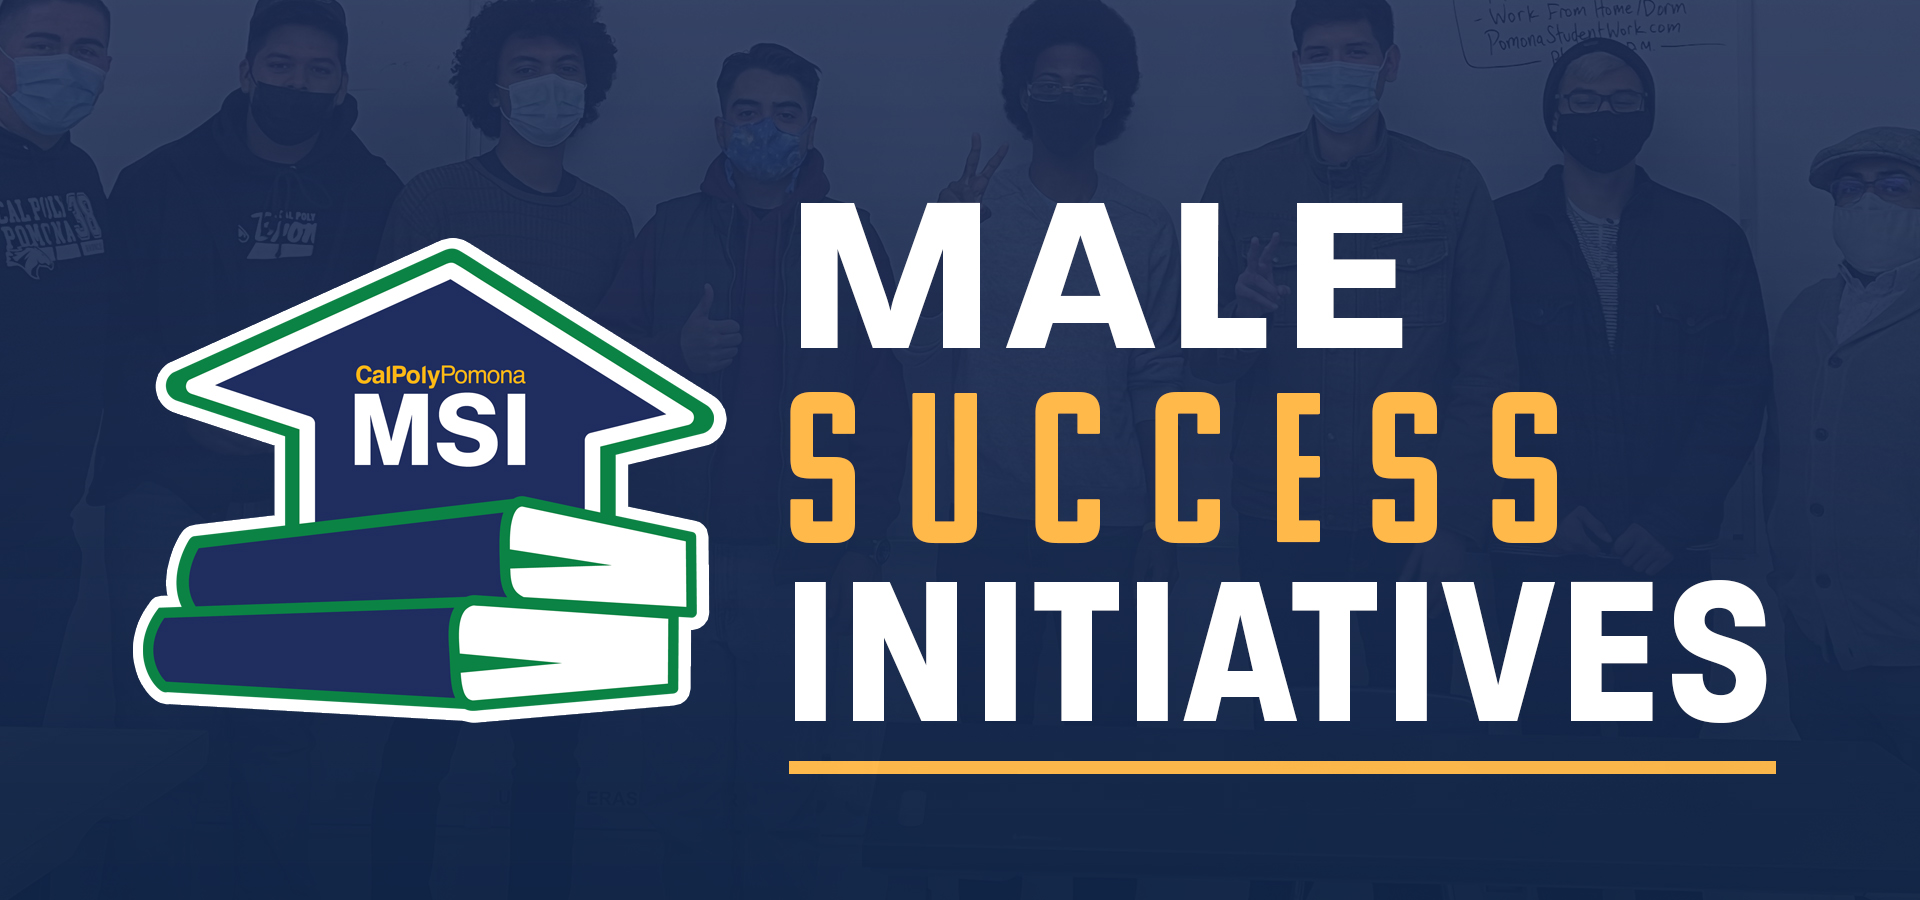 Male Success Initiatives Banner